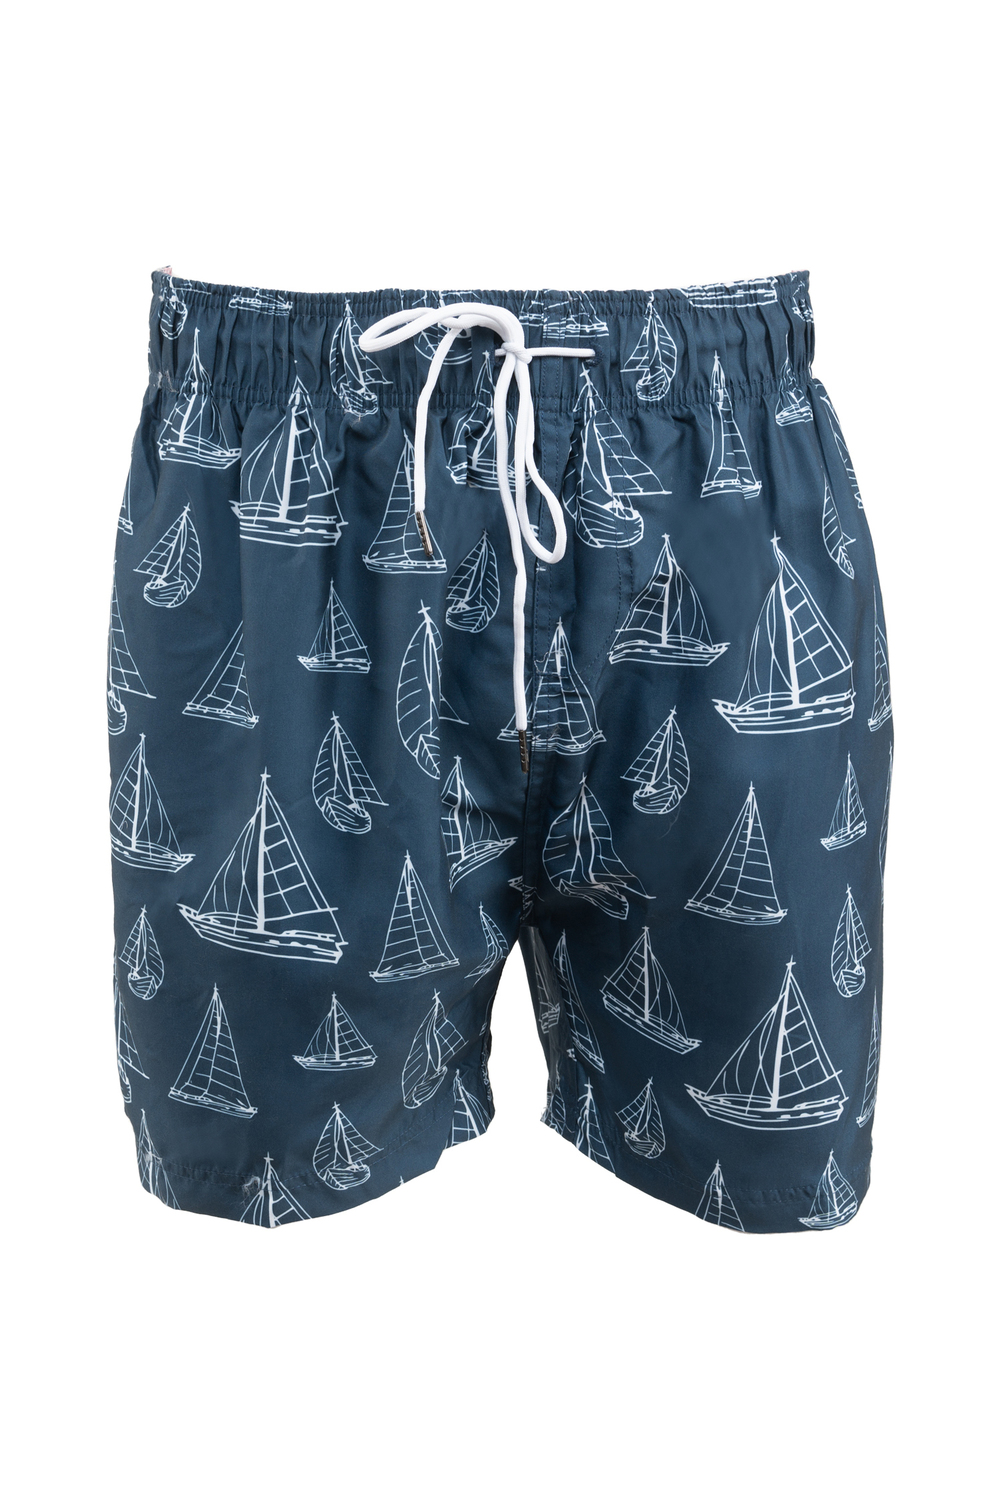 Spicy Tuna - Men's swim trunk - Sailboats - Plus Size. Colour: navy blue.  Size: 2xl